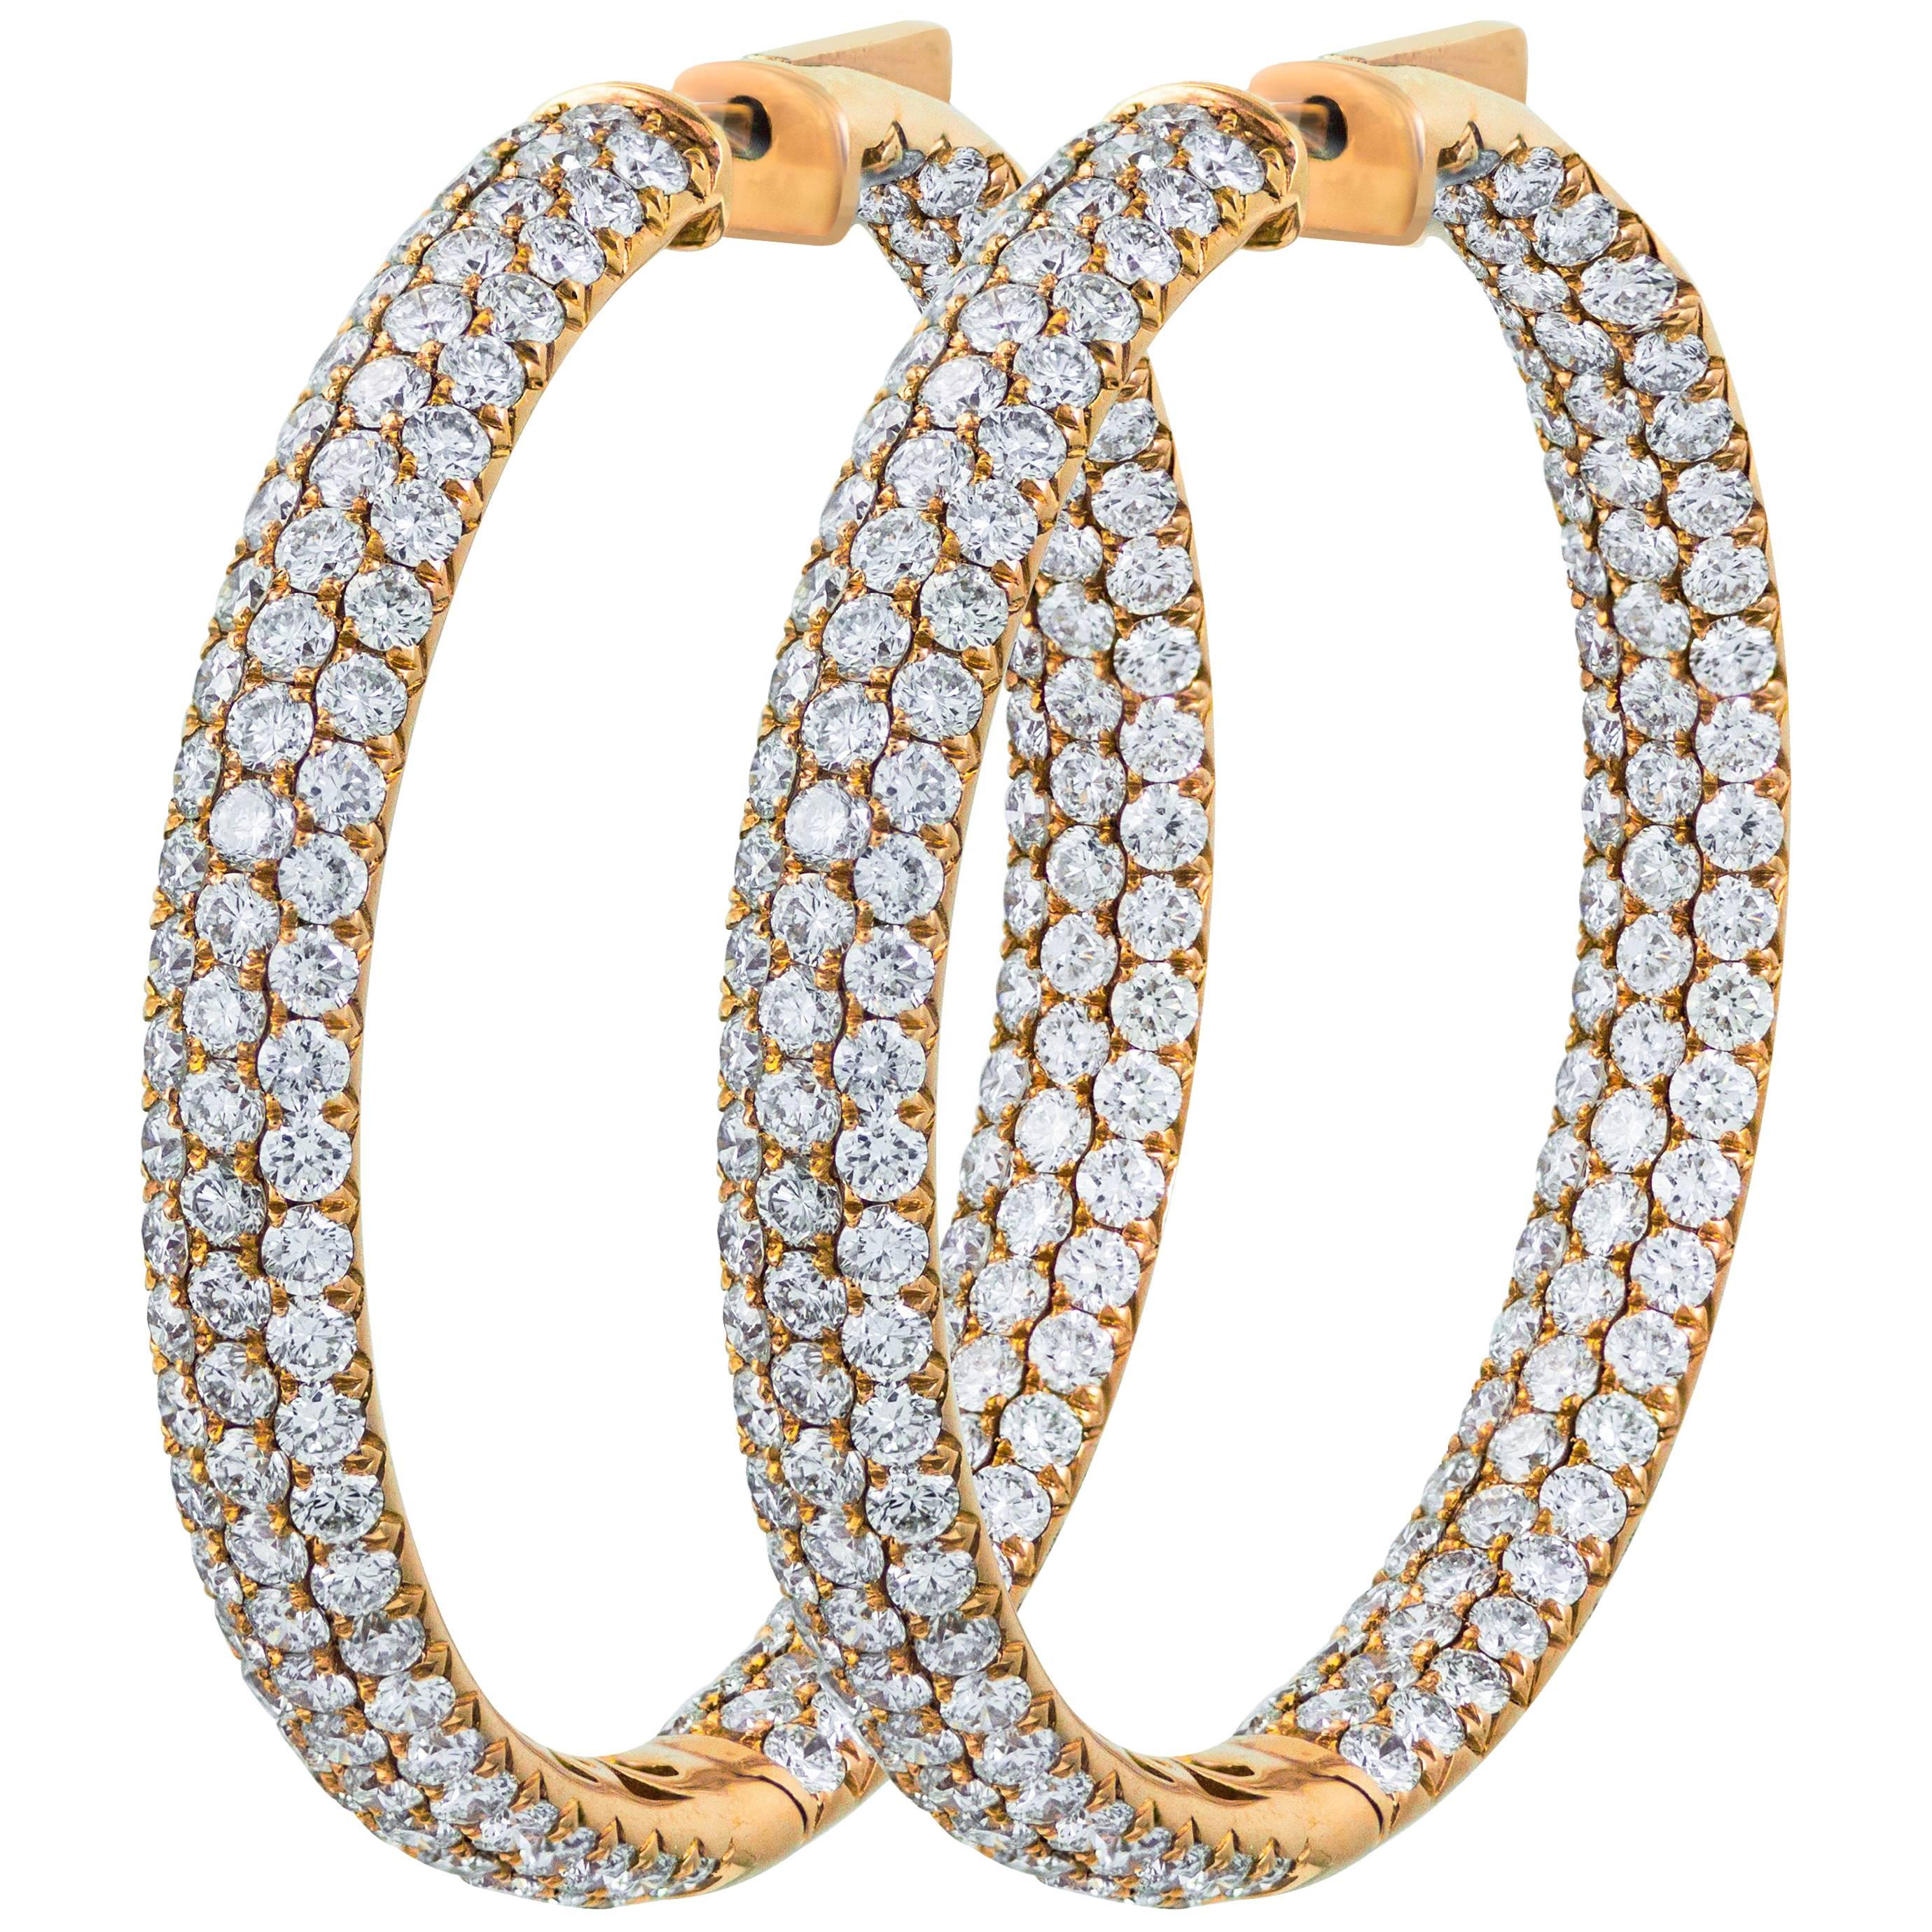 Roman Malakov 9.55 Carats Total Round Diamond Pave Set Hoop Earrings